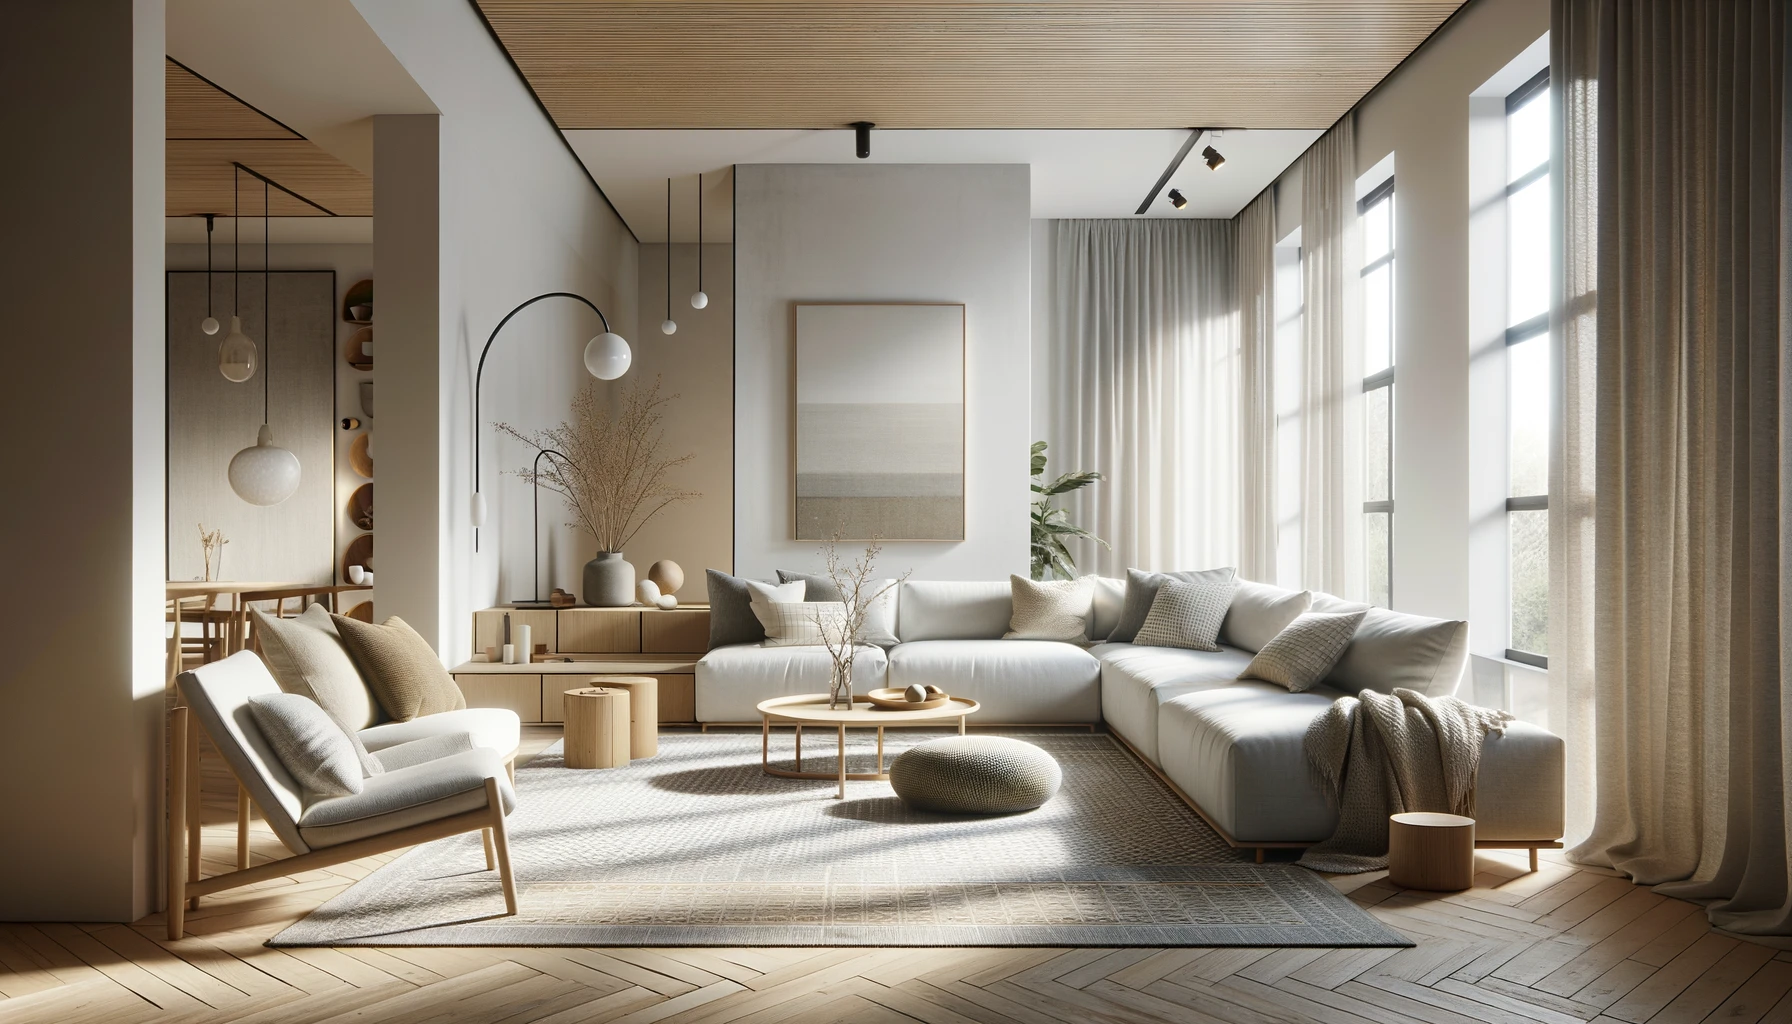 Modern sunlit lounge room with Scandinavian design furnishings.